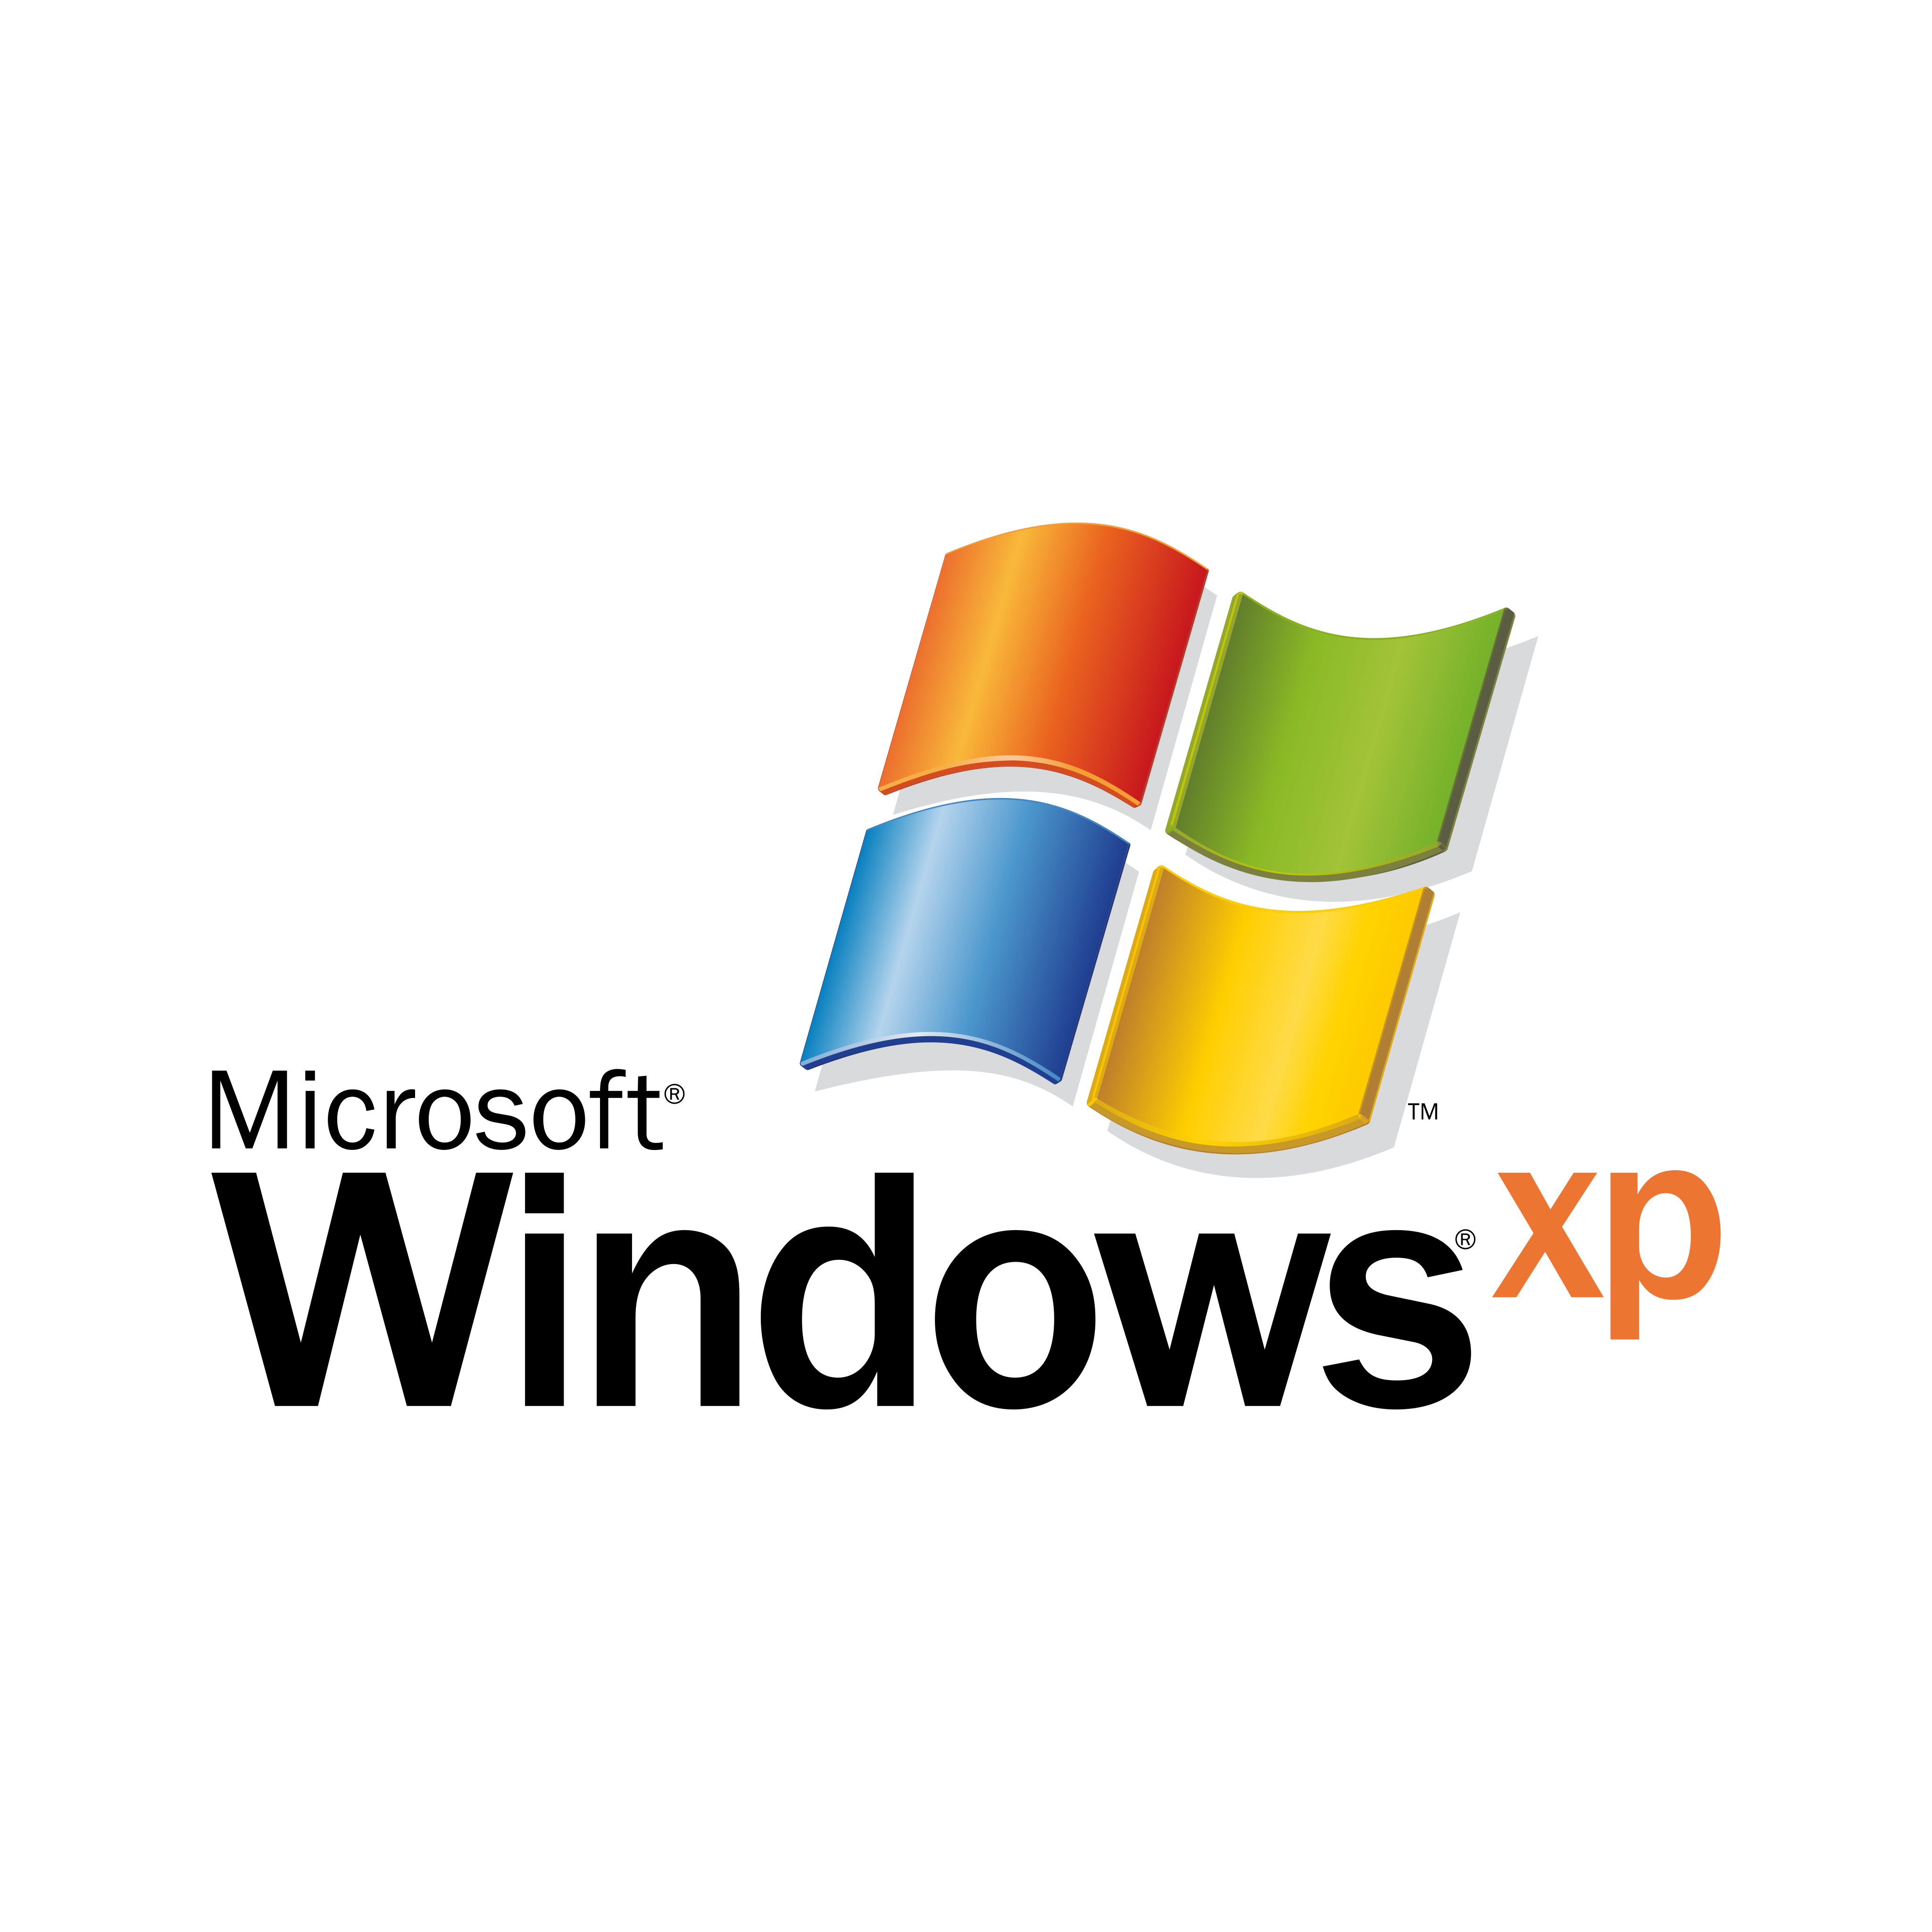 windows xp logo 0 - Windows XP Logo